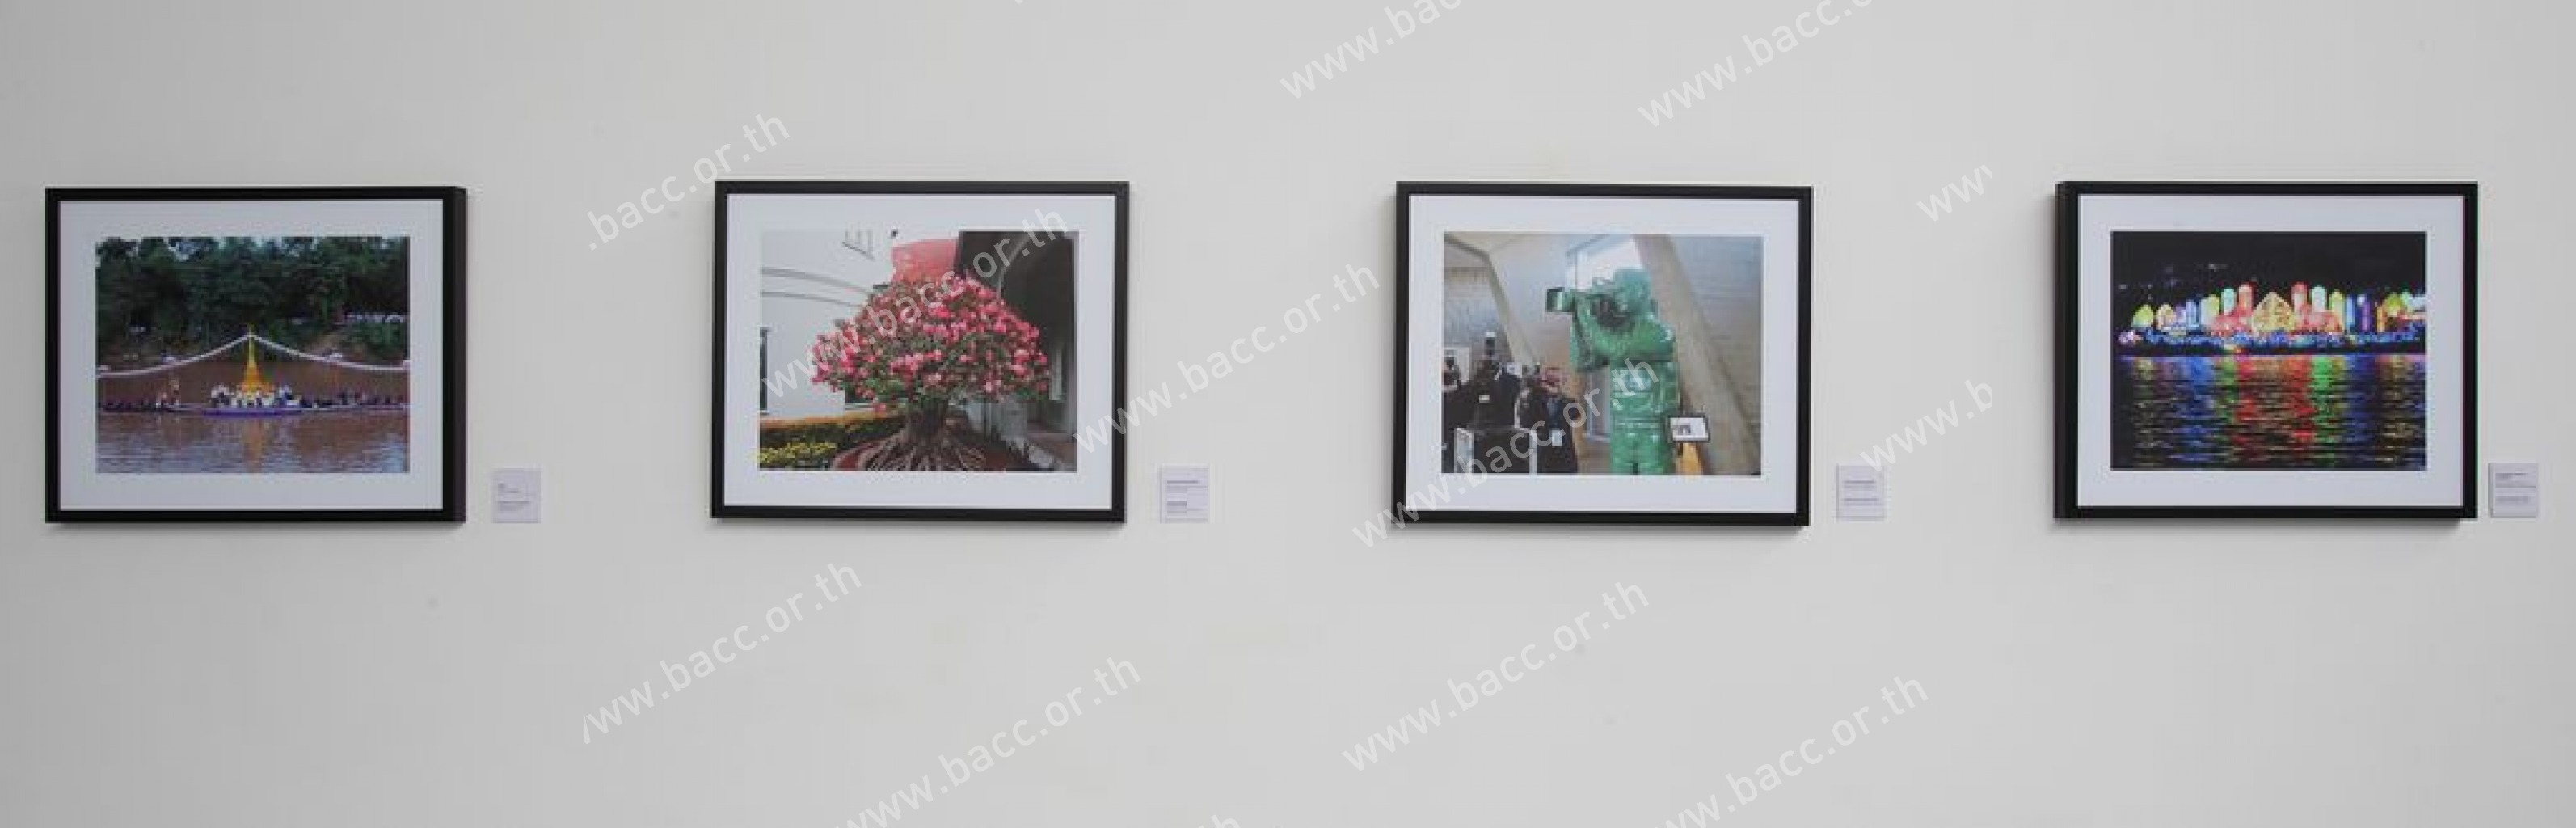 Photography Exhibition by H.R.H. Princess Maha Chakri Sirindhorn “Traveling Photos, Photos Traveling”